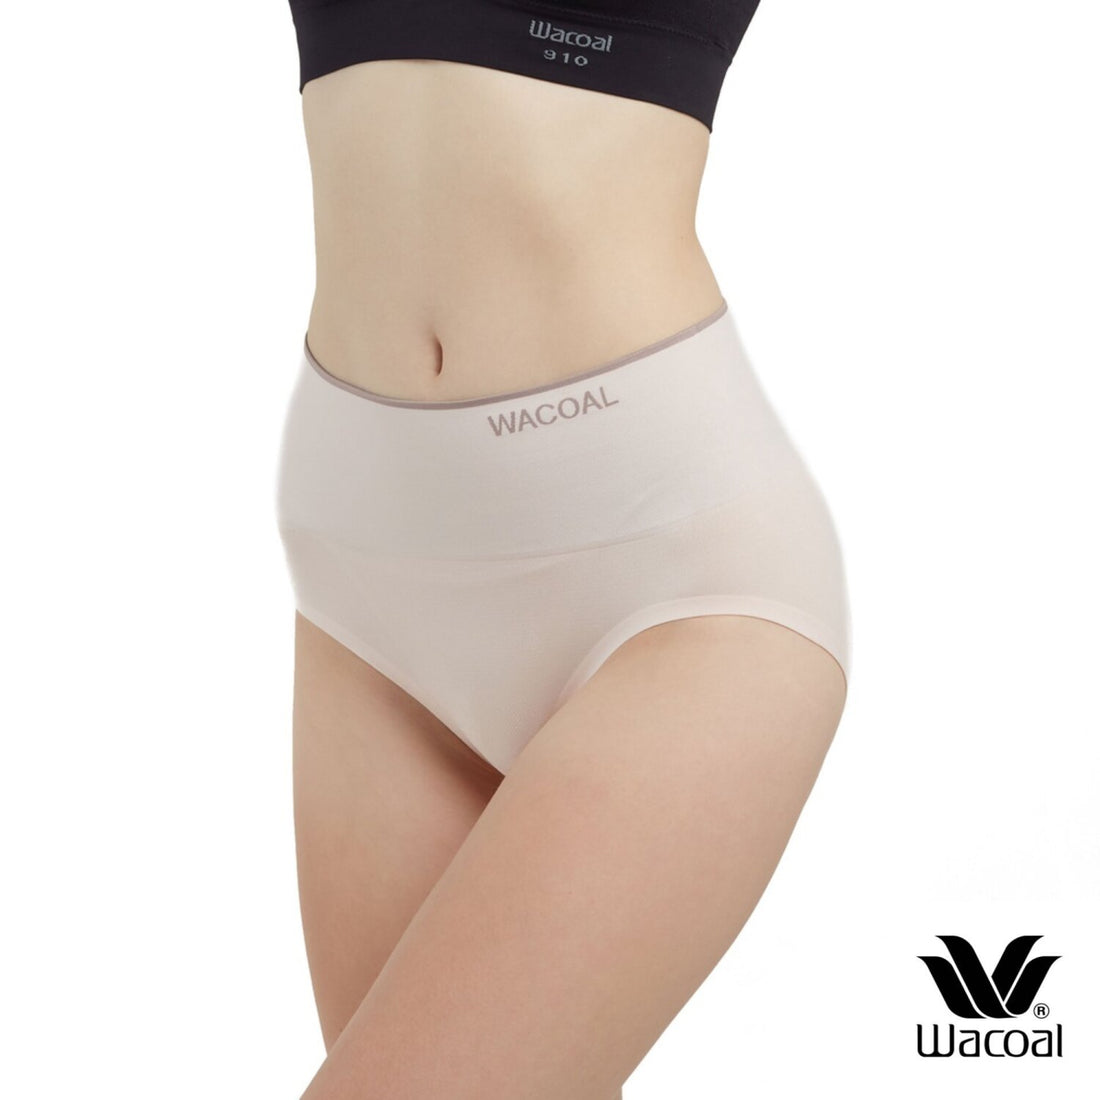 Wacoal H-fit secret support กางเกงในกระชับหน้าท้อง ไร้ตะเข็บ รูปแบบเต็มตัว Set 3 ชิ้น รุ่น WU4T98 คละสี (สีดำ-สีเบจ-สีโอวัลติน)